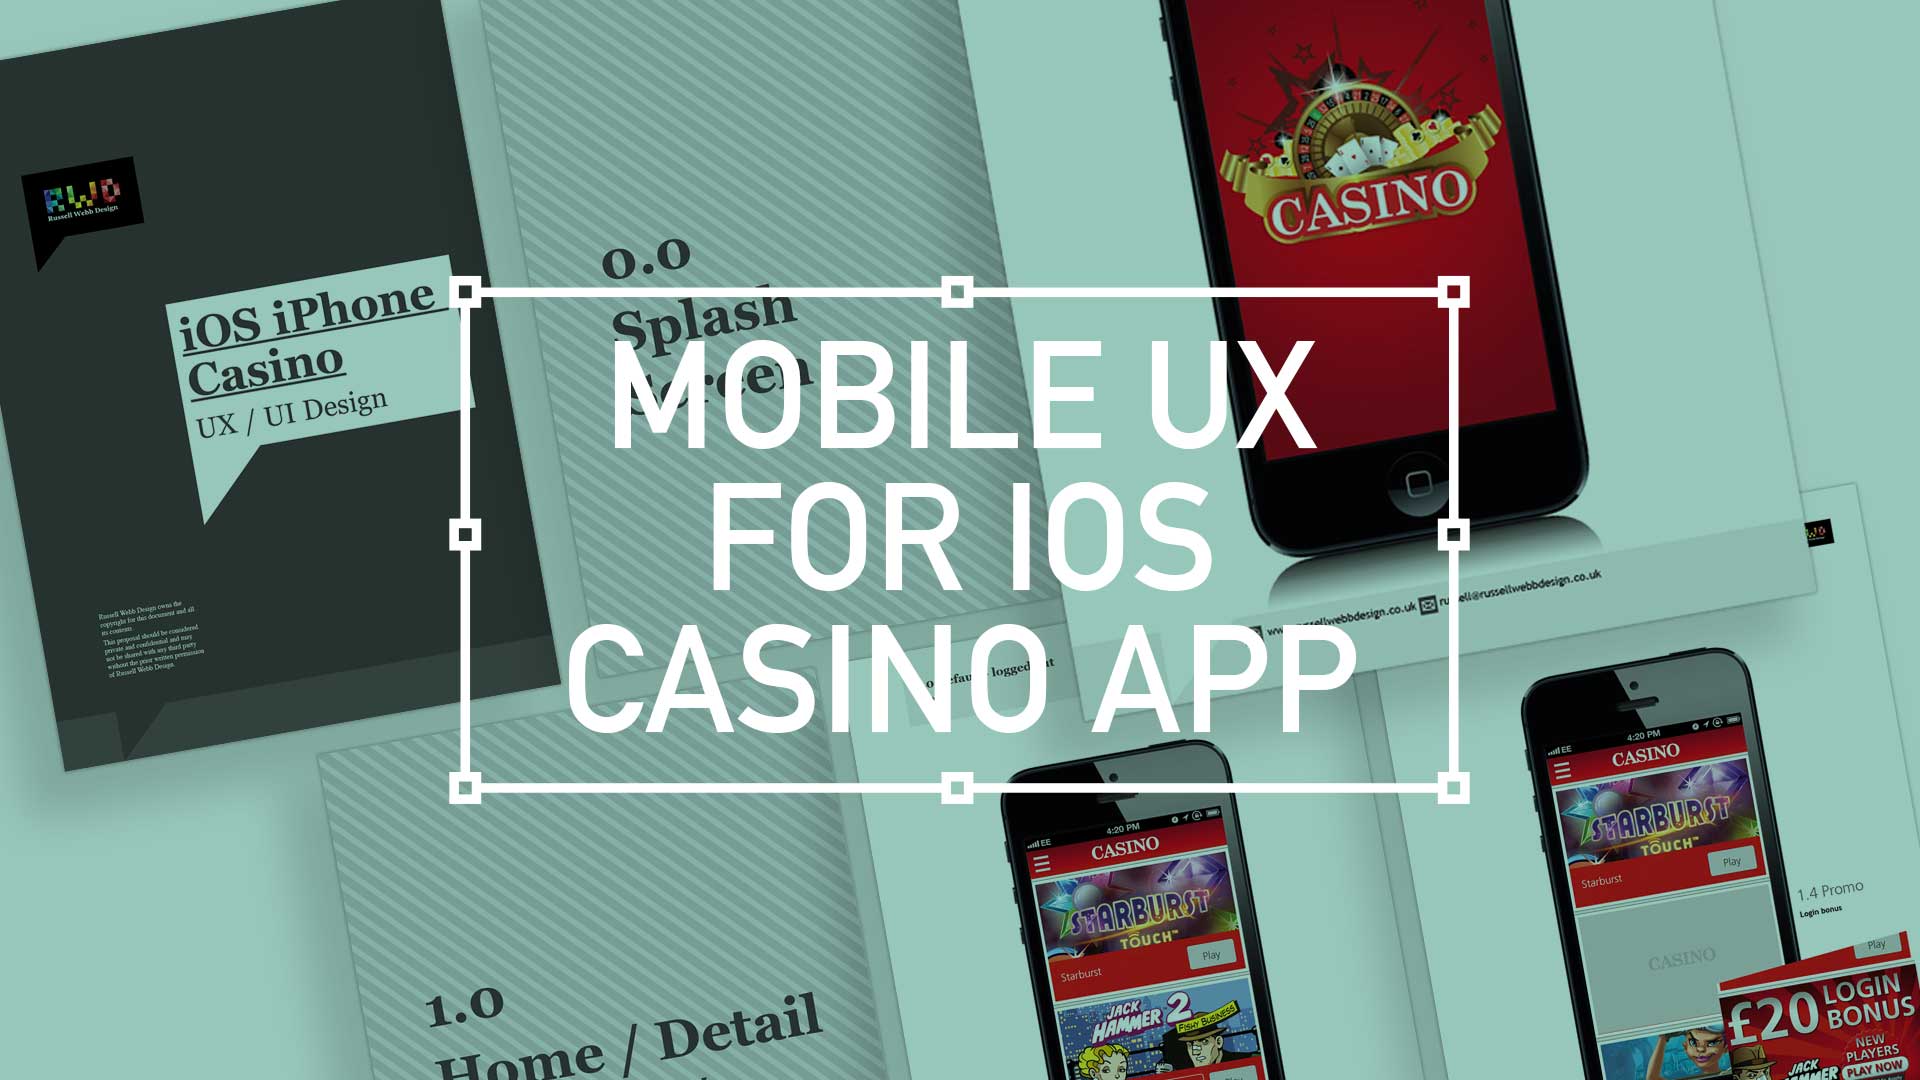 iOS Casino App for the iphone